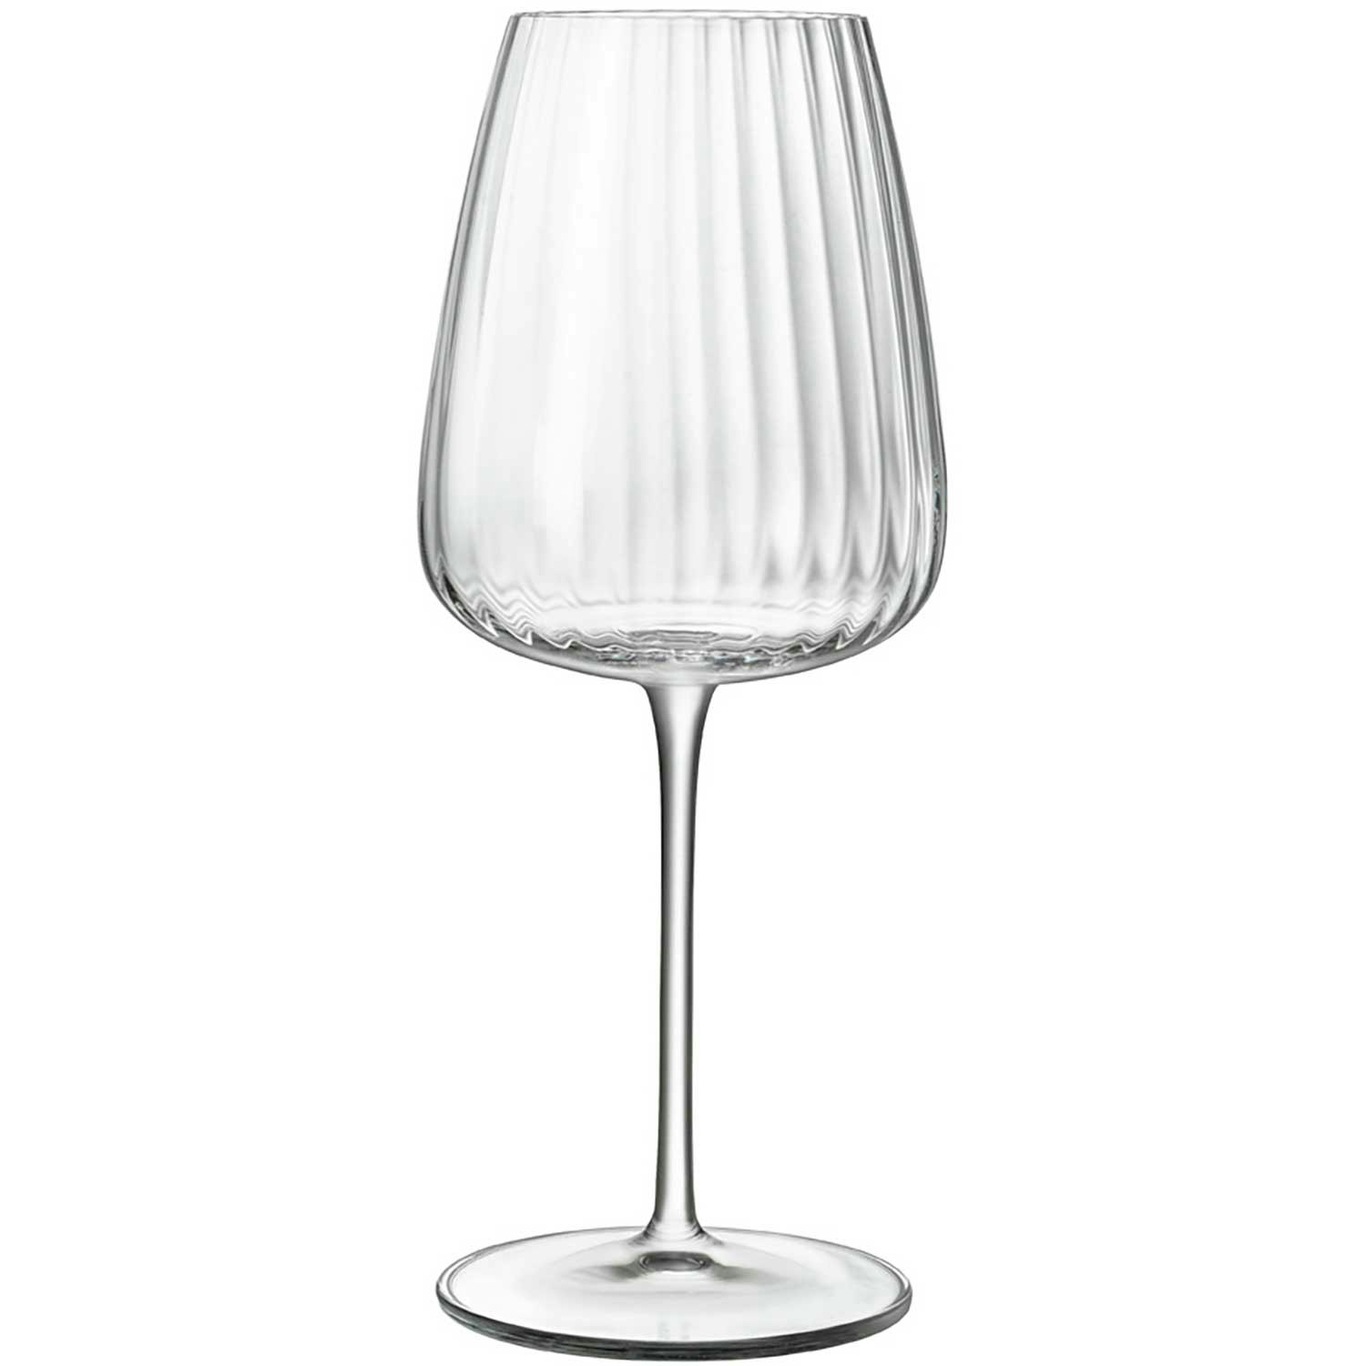 https://royaldesign.com/image/2/luigi-bormioli-white-wine-glass-chardonnay-optica-55-cl-4-pcs-0?w=800&quality=80